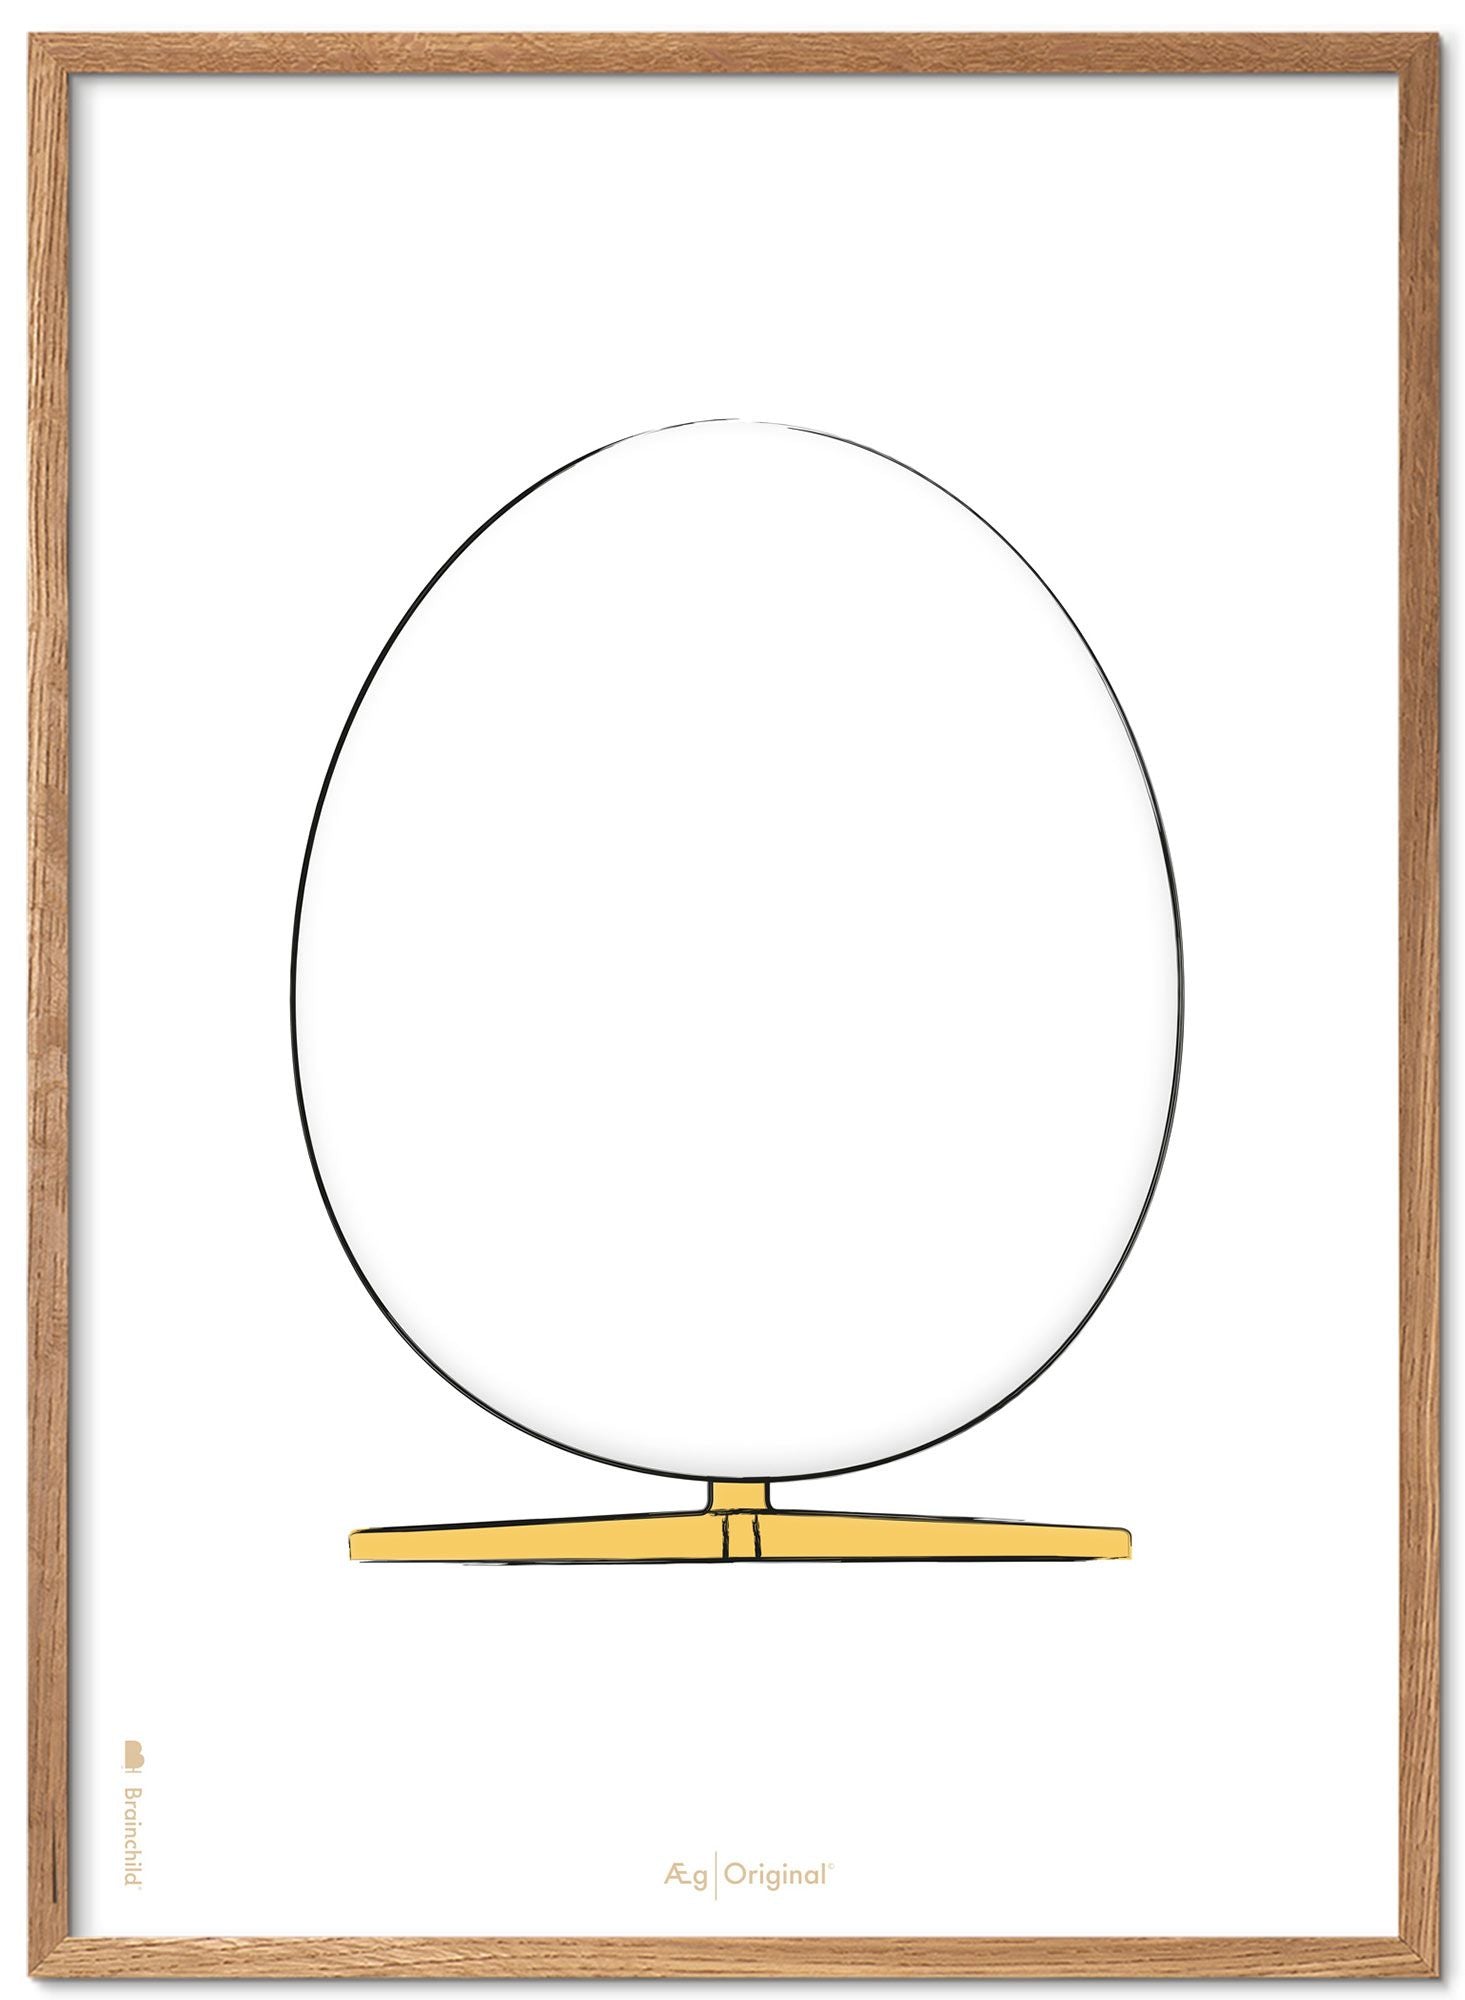 Brainchild The Egg Design Sketch Poster Frame Made Of Light Wood 70x100 Cm, White Background